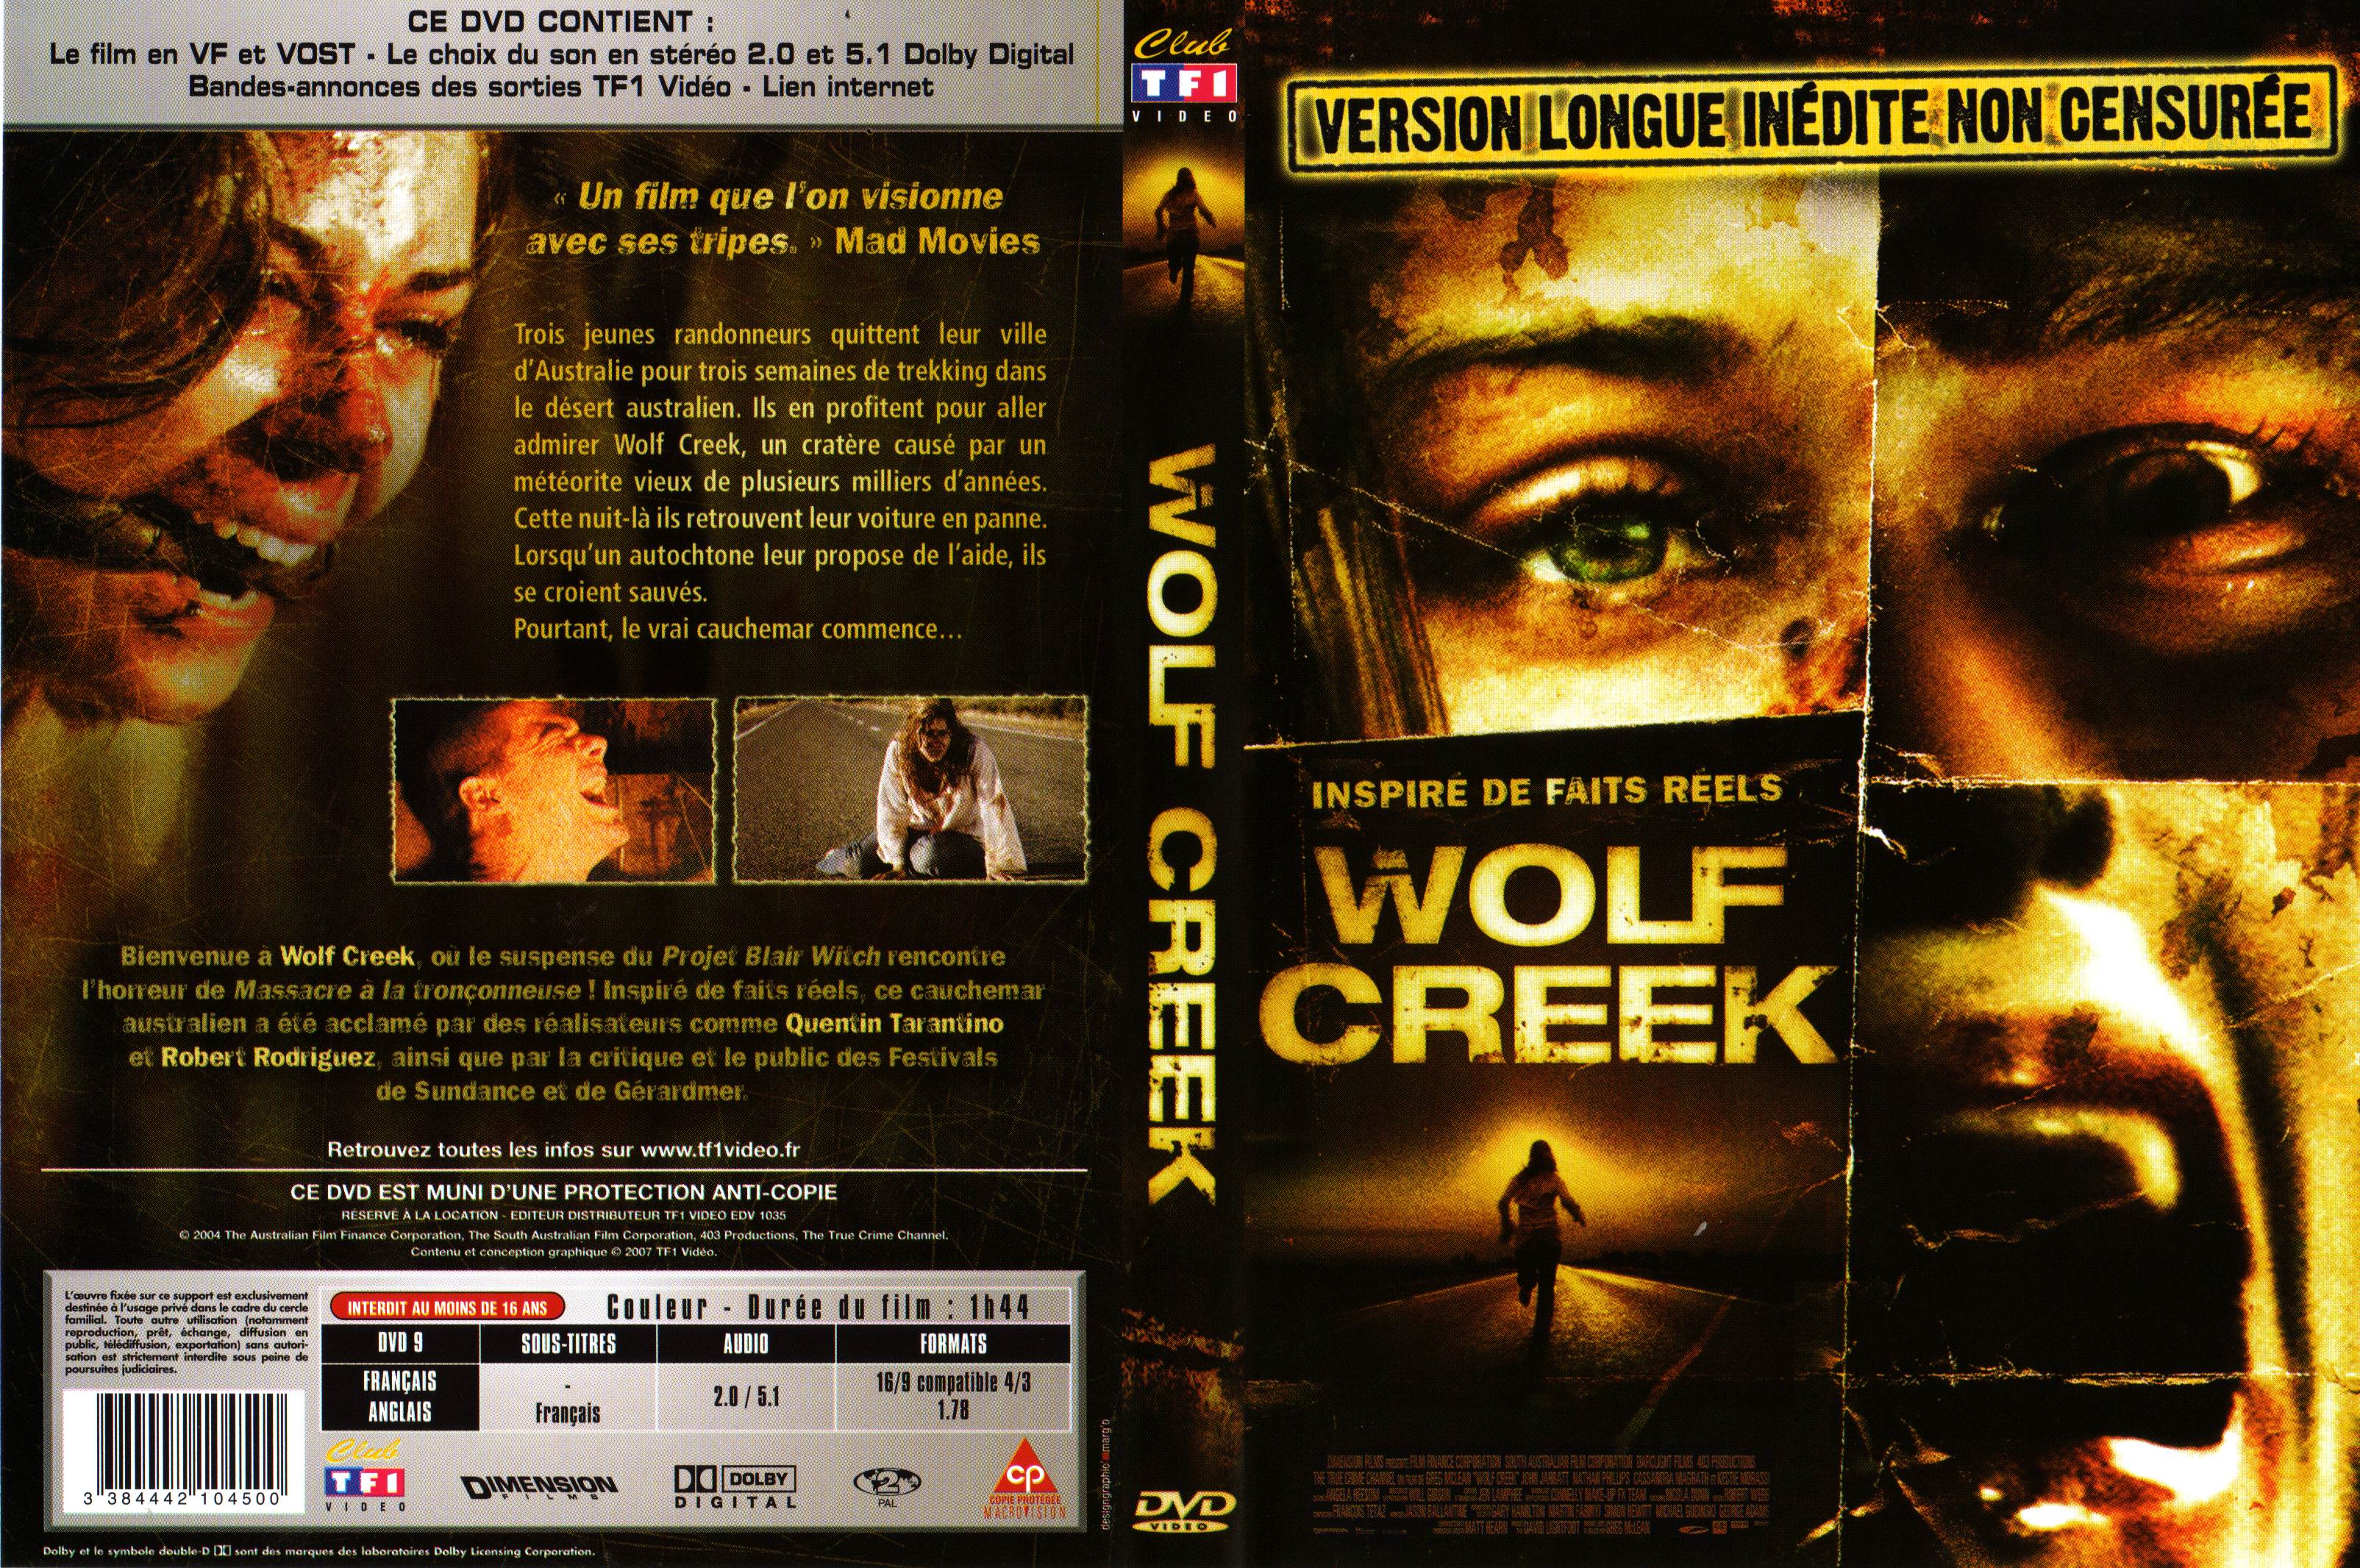 Jaquette DVD Wolf creek